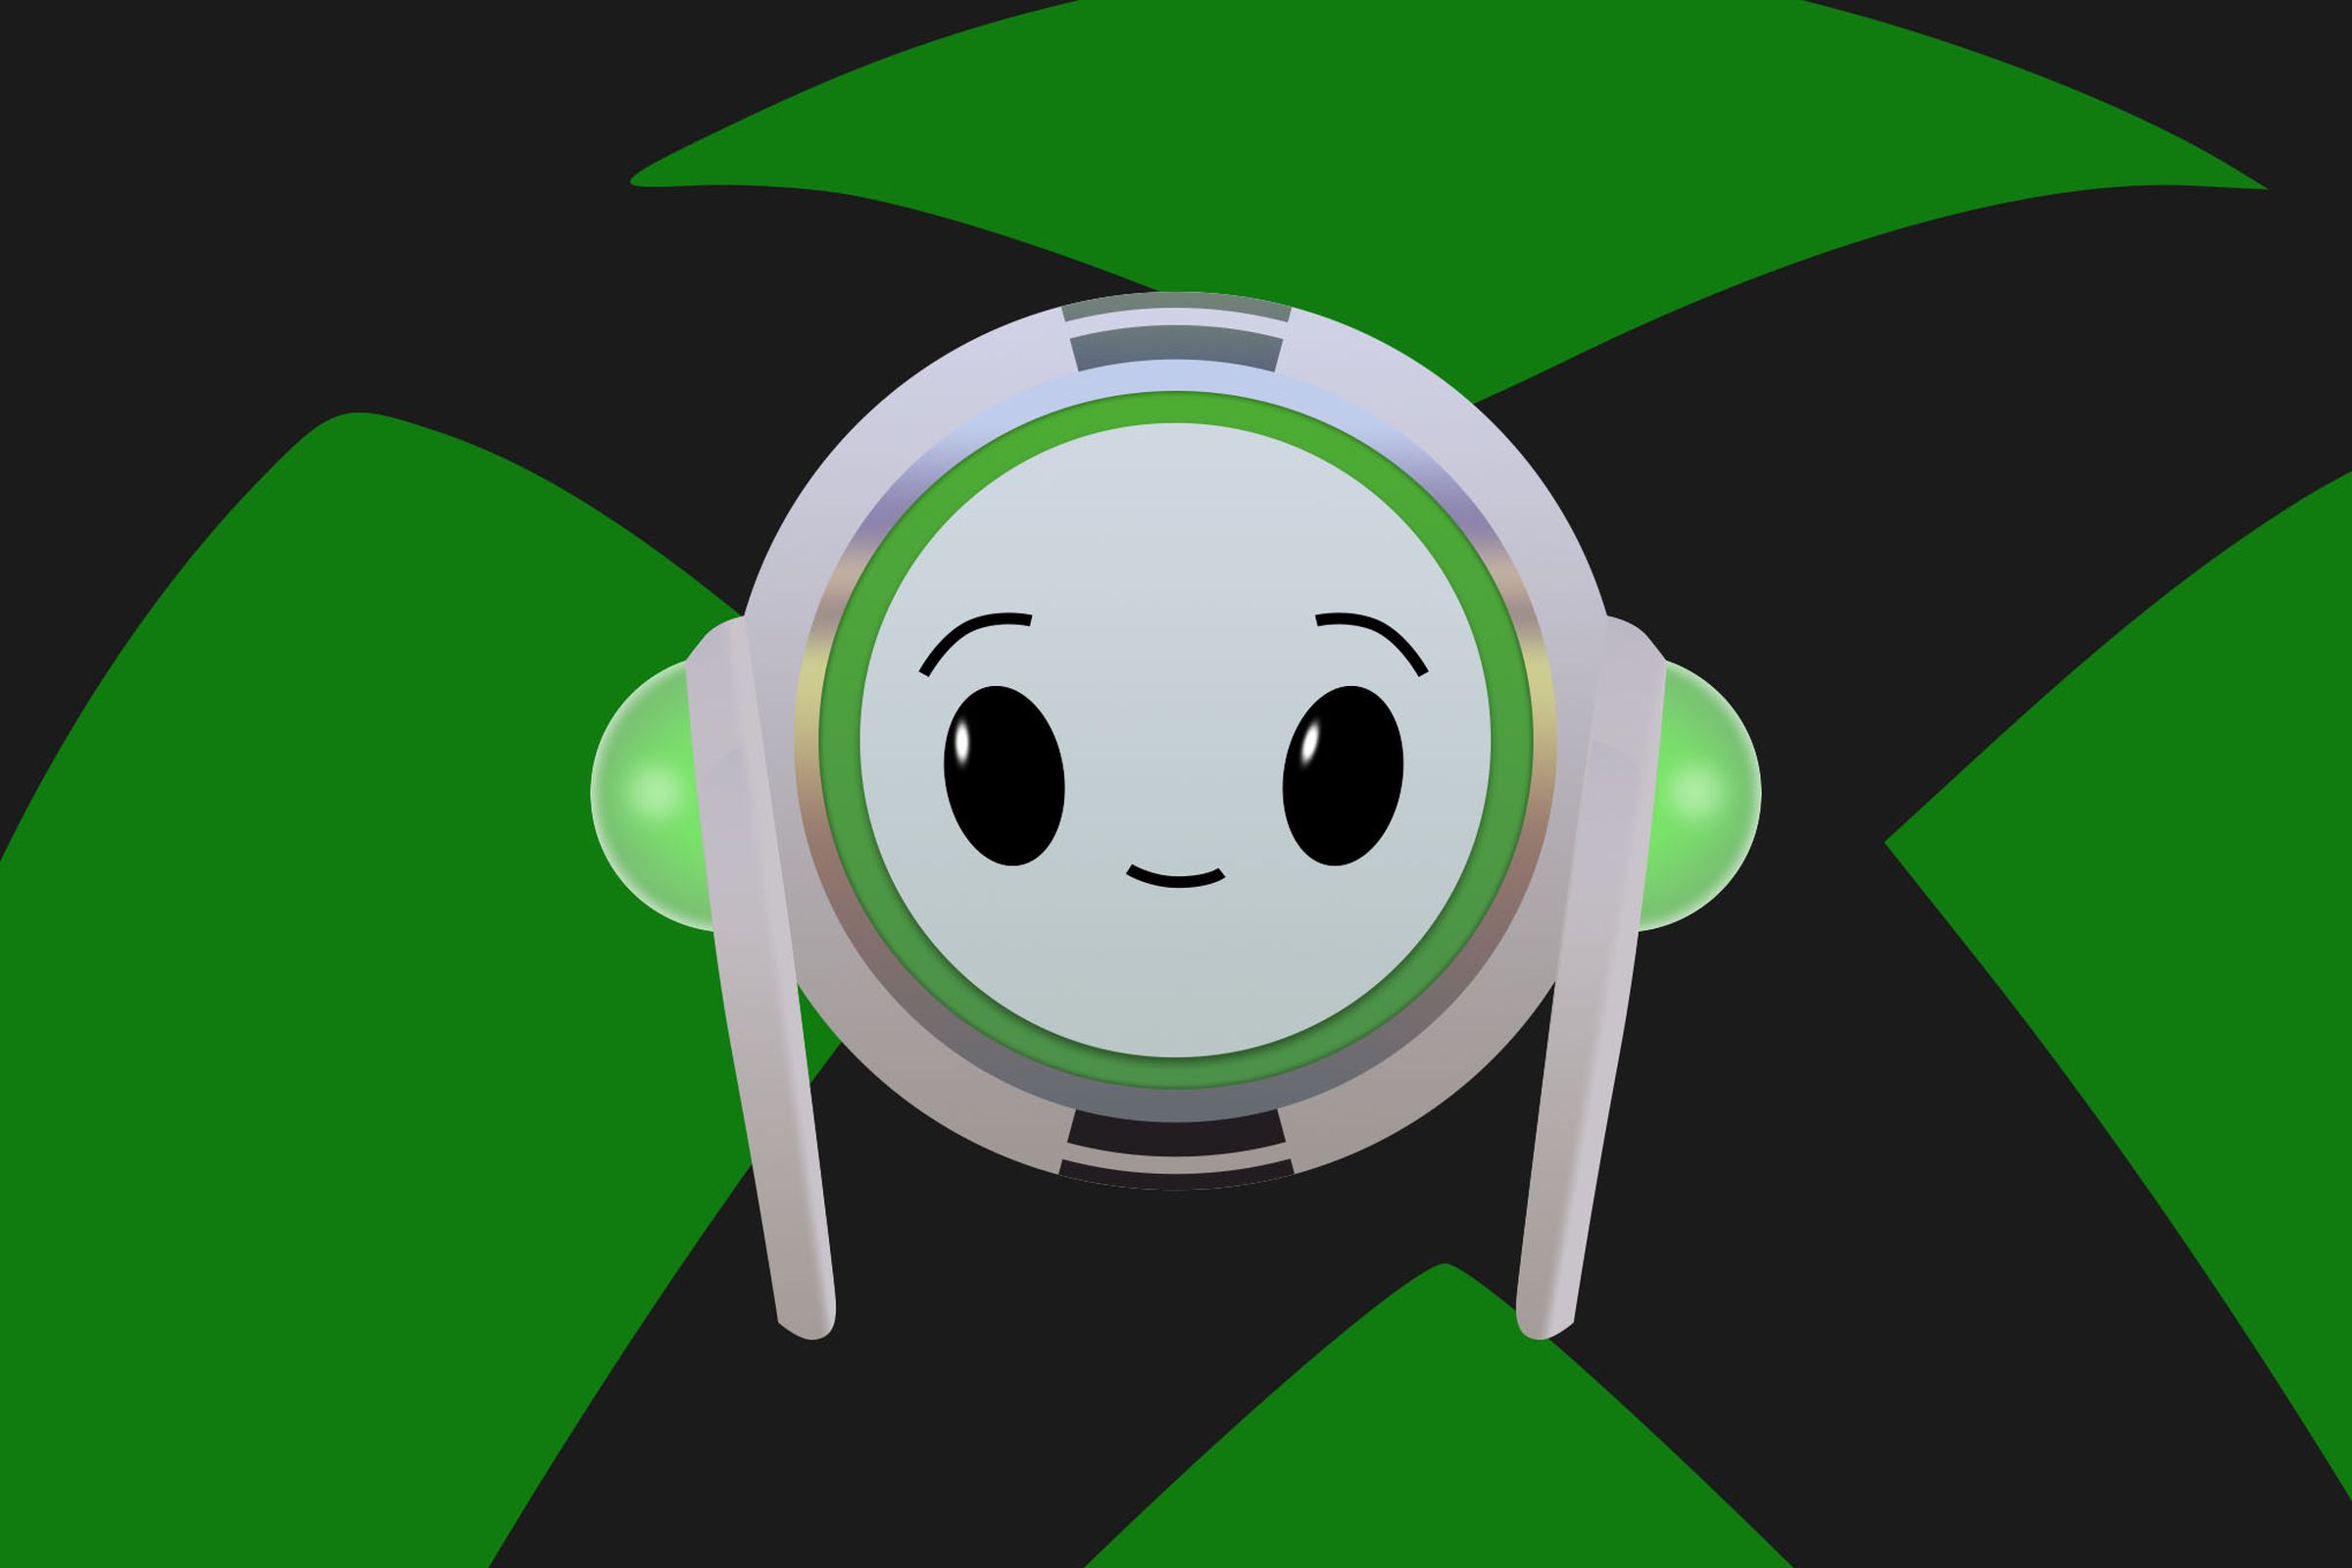 Макет чат-бота Microsoft для Xbox